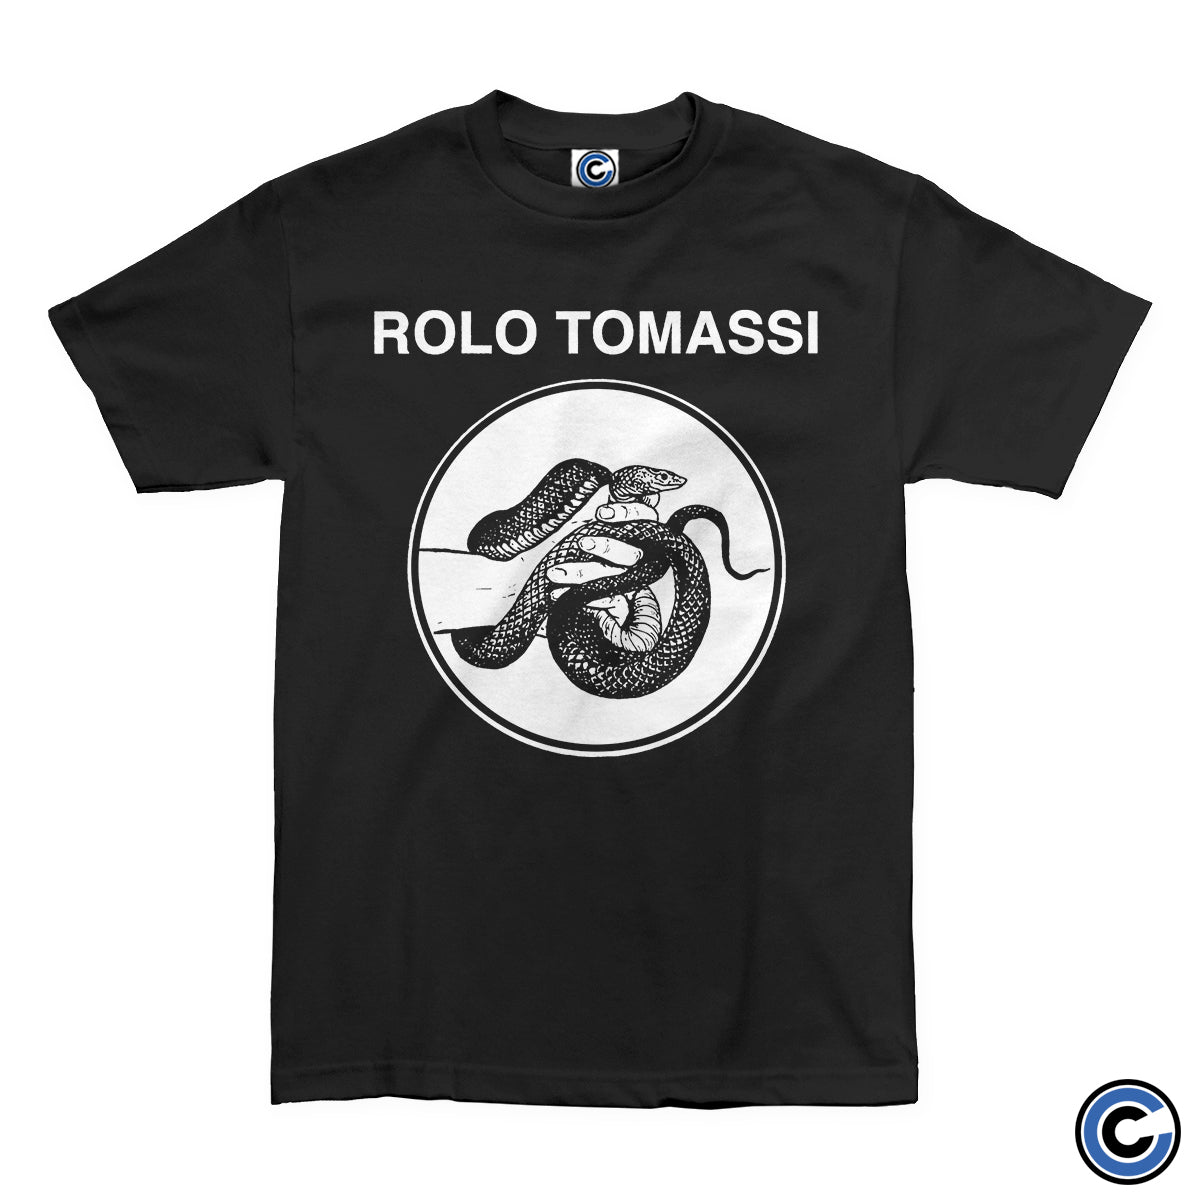 Rolo Tomassi "Snake Fist" Shirt